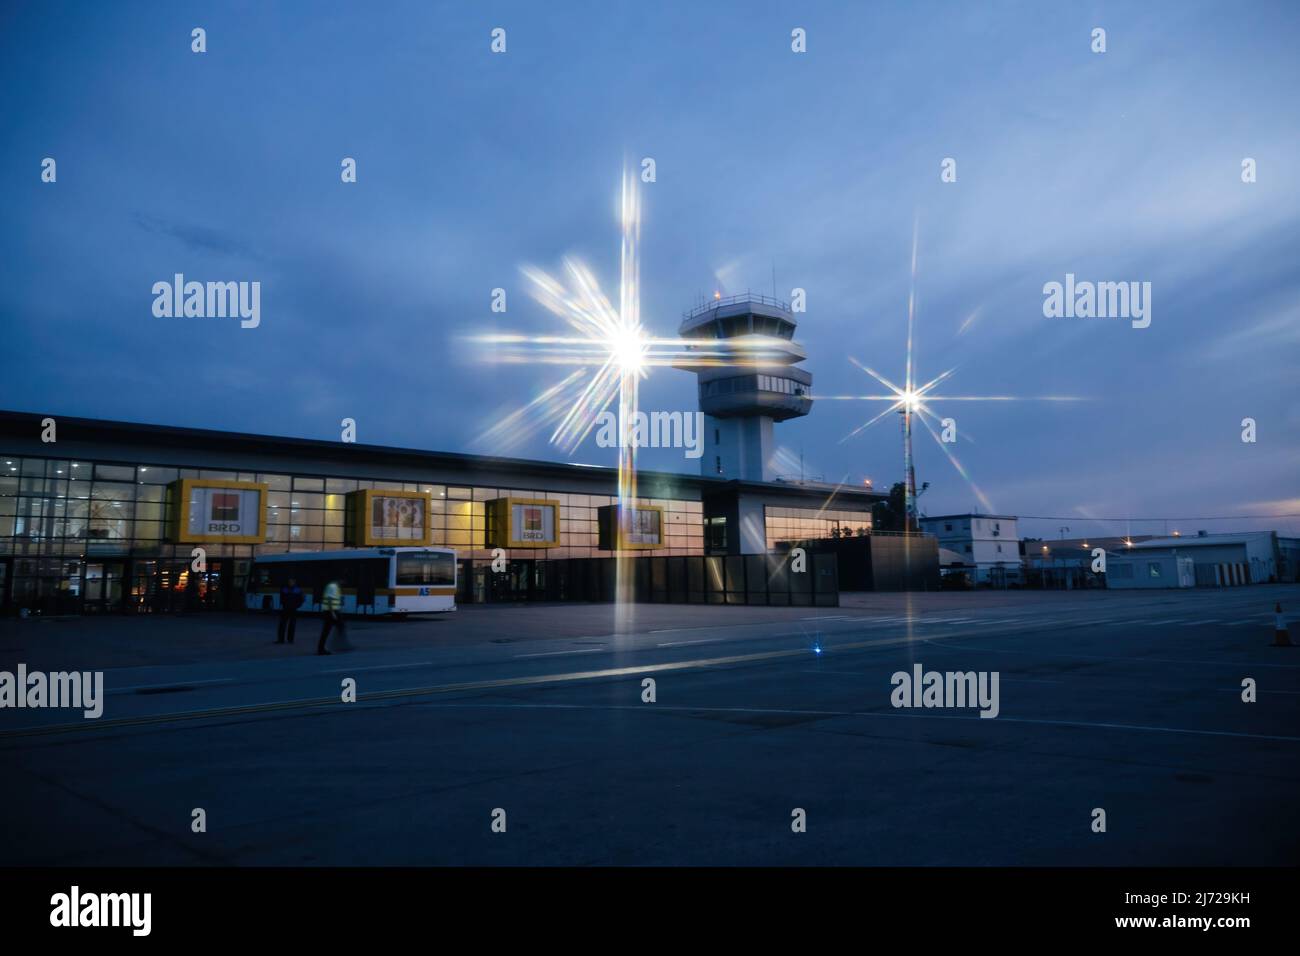 Timisoara, Romania Jun 17, 2015: Arrival area for low cost flights at the Timisoara International Airport Traian Vuia - star filter on the light poles Stock Photo